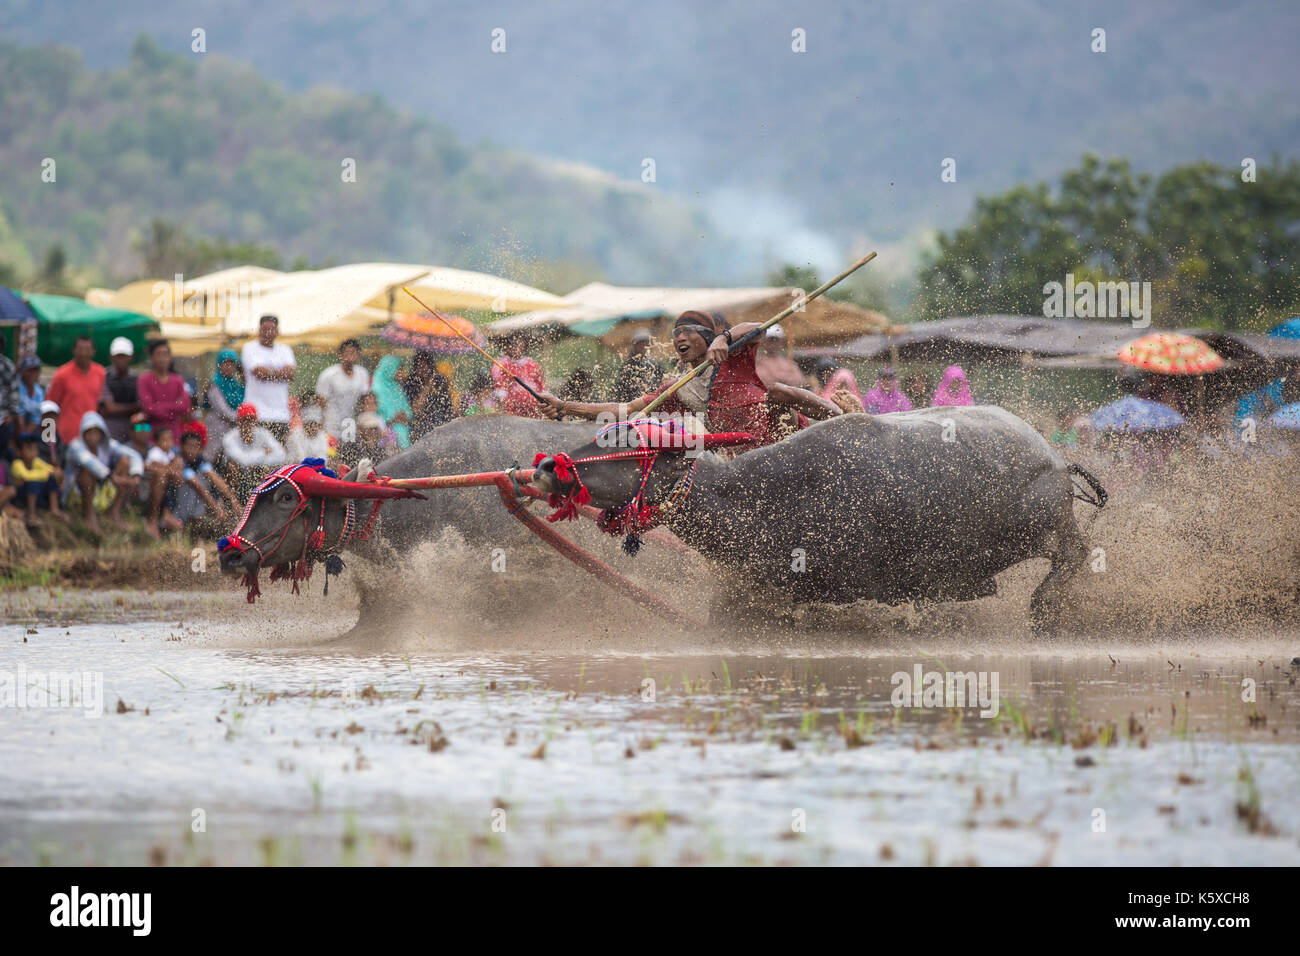 Jereweh, Sumbawa Barat, Indonesia - September 10, 2017: Local buffalo race competition held on Sumbawa in Jereweh, Indonesia on September 10,  2017. Stock Photo